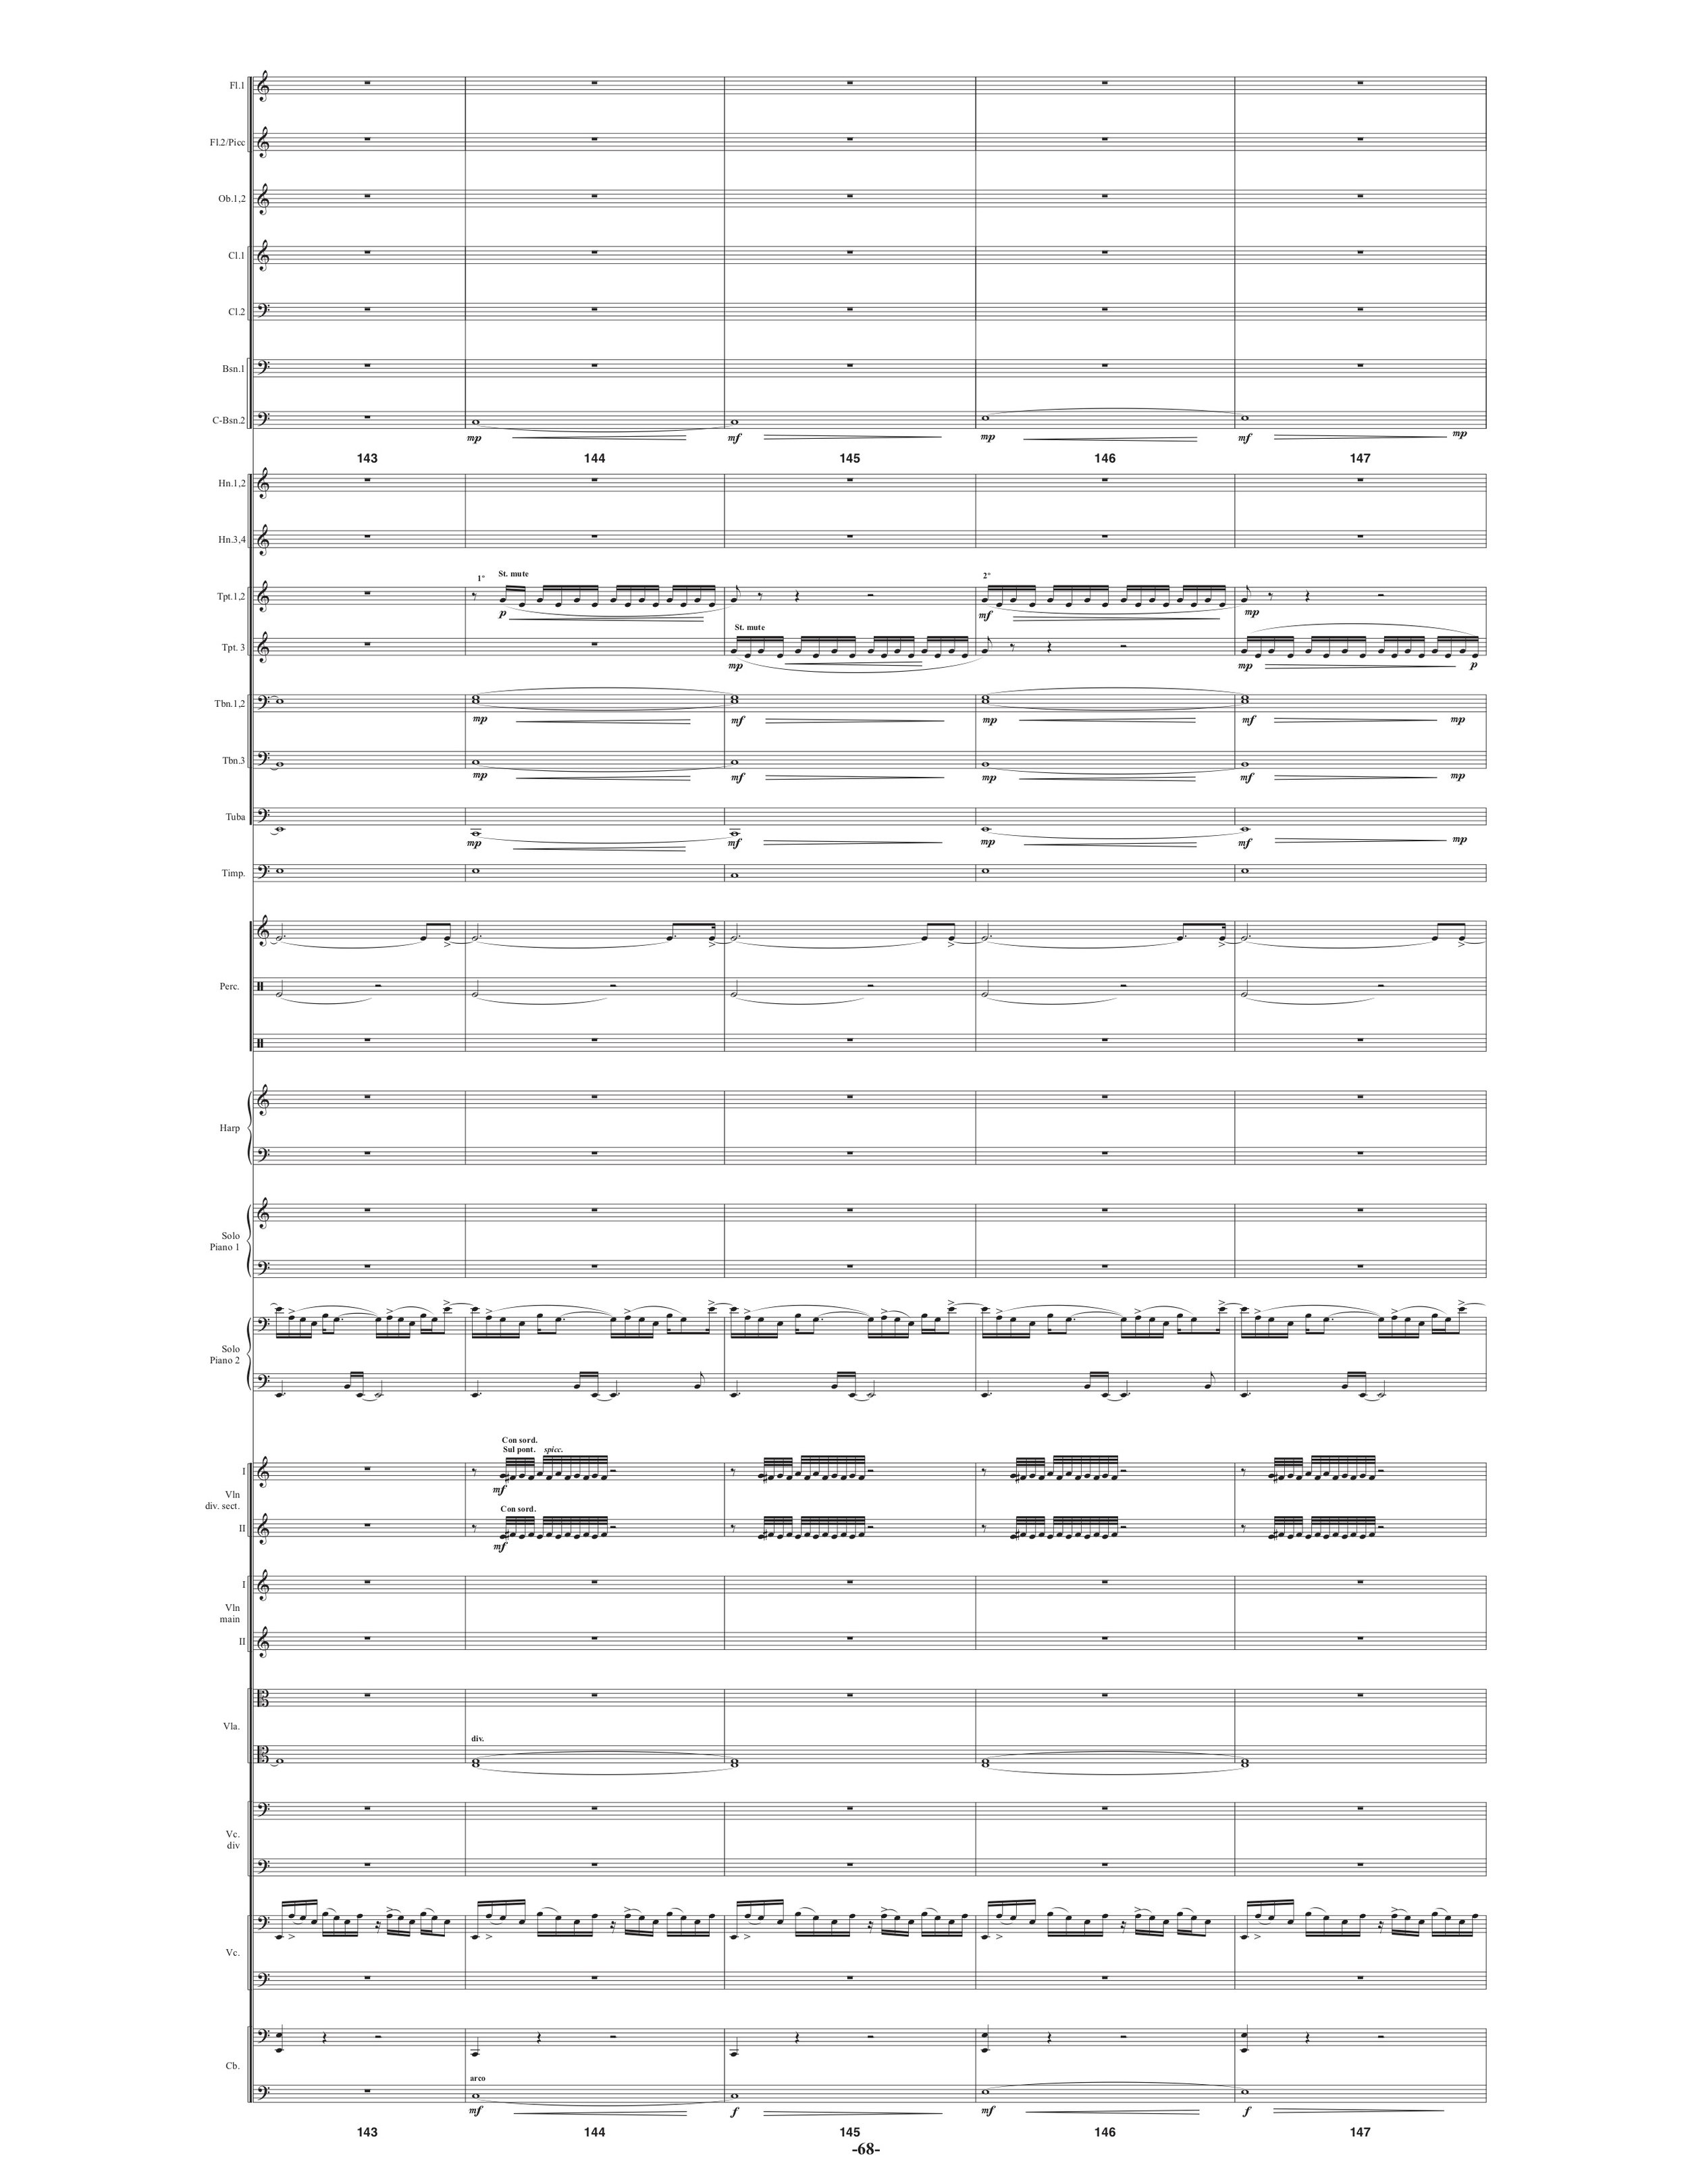 Symphony_Orch & 2 Pianos p73.jpg